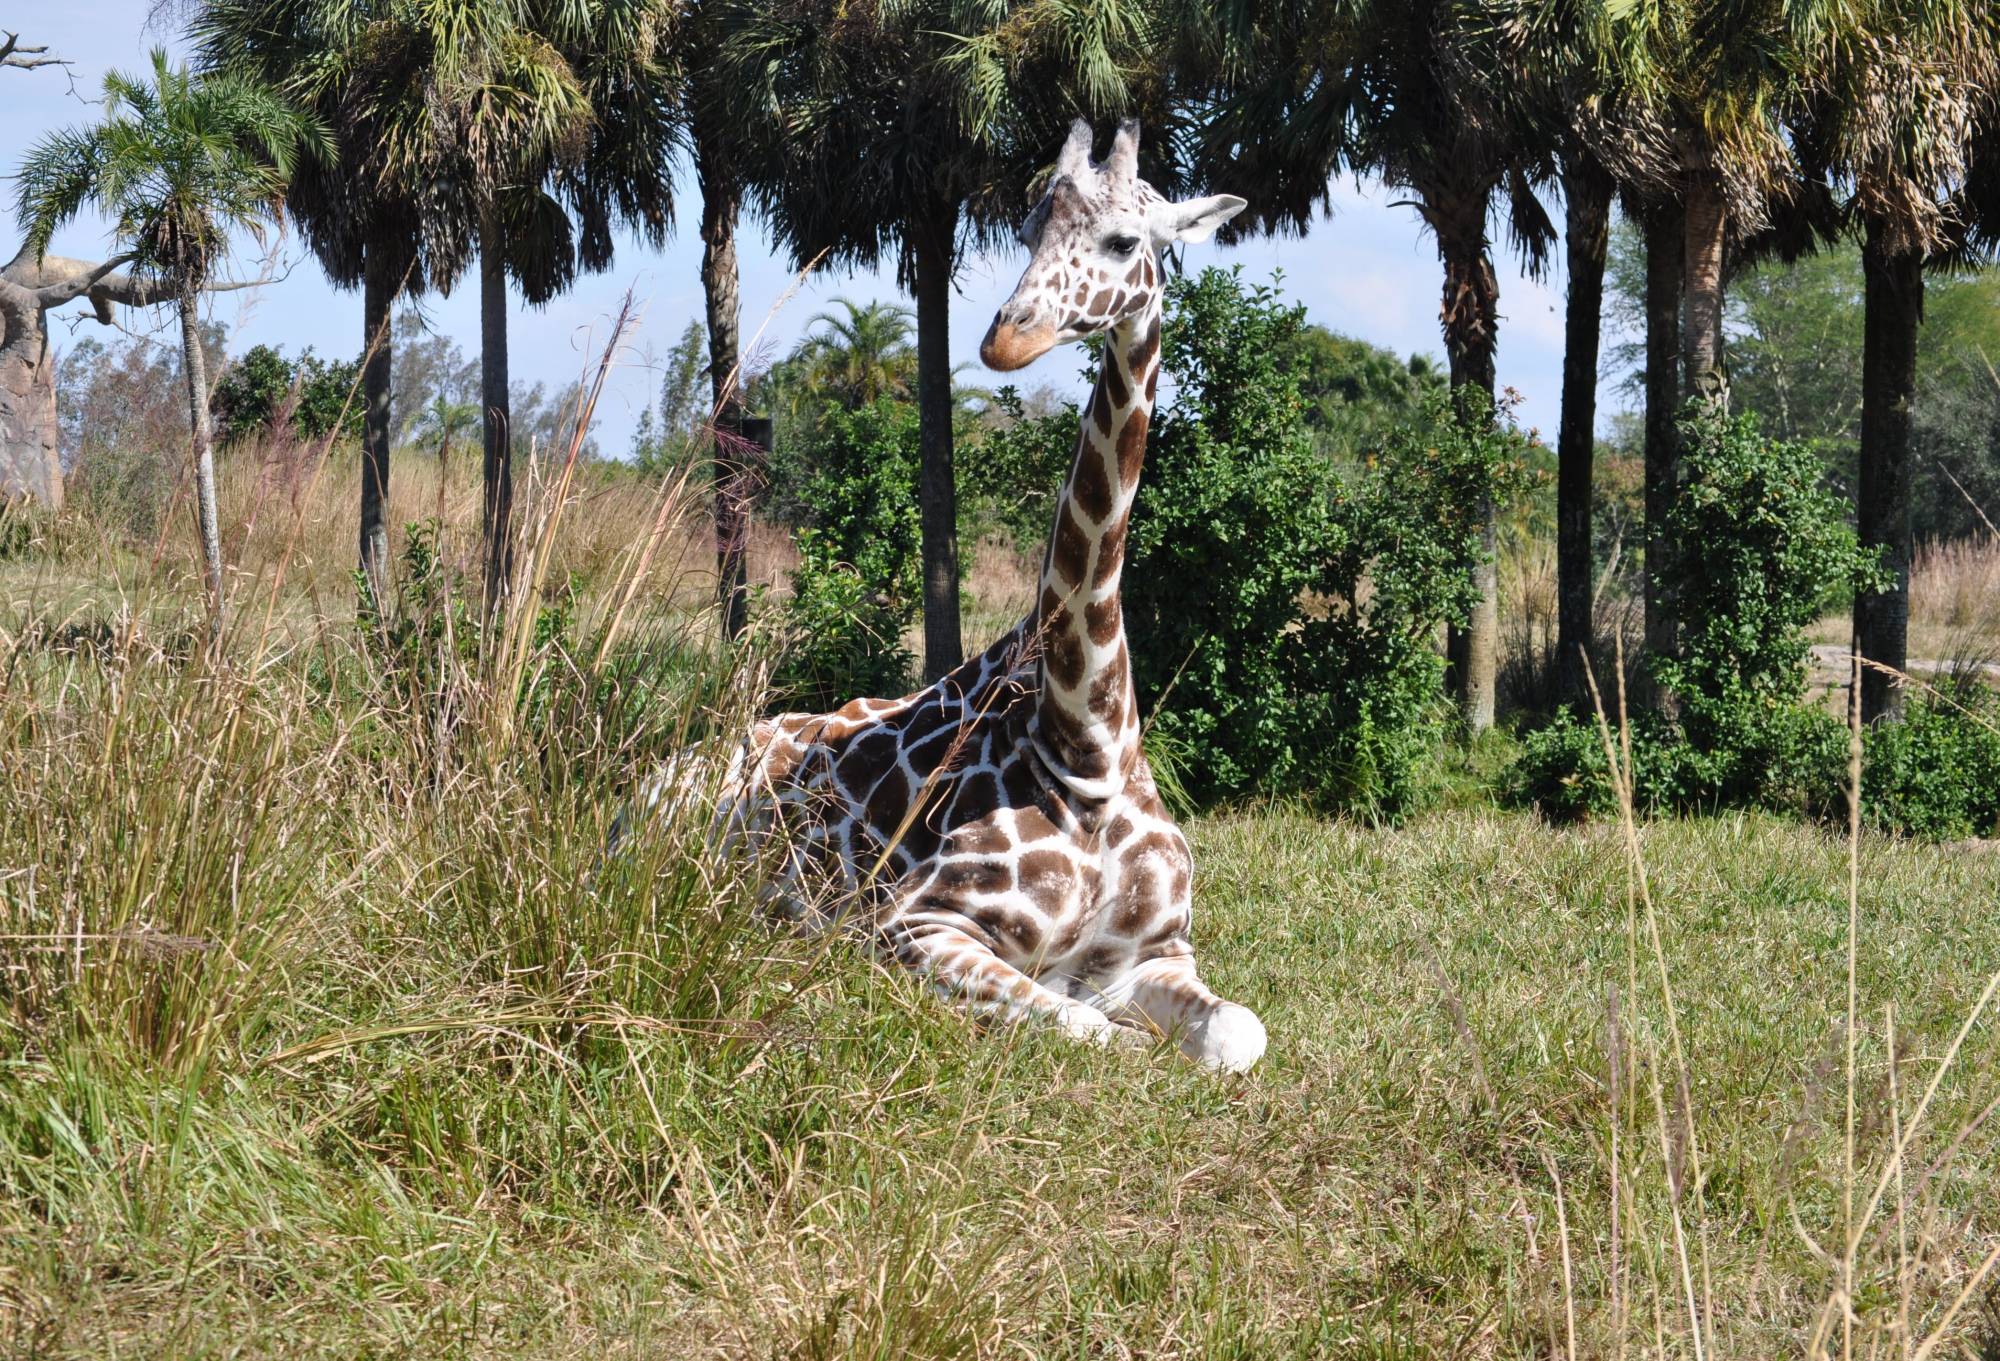 Animal Kingdom - Giraffe on the Safari